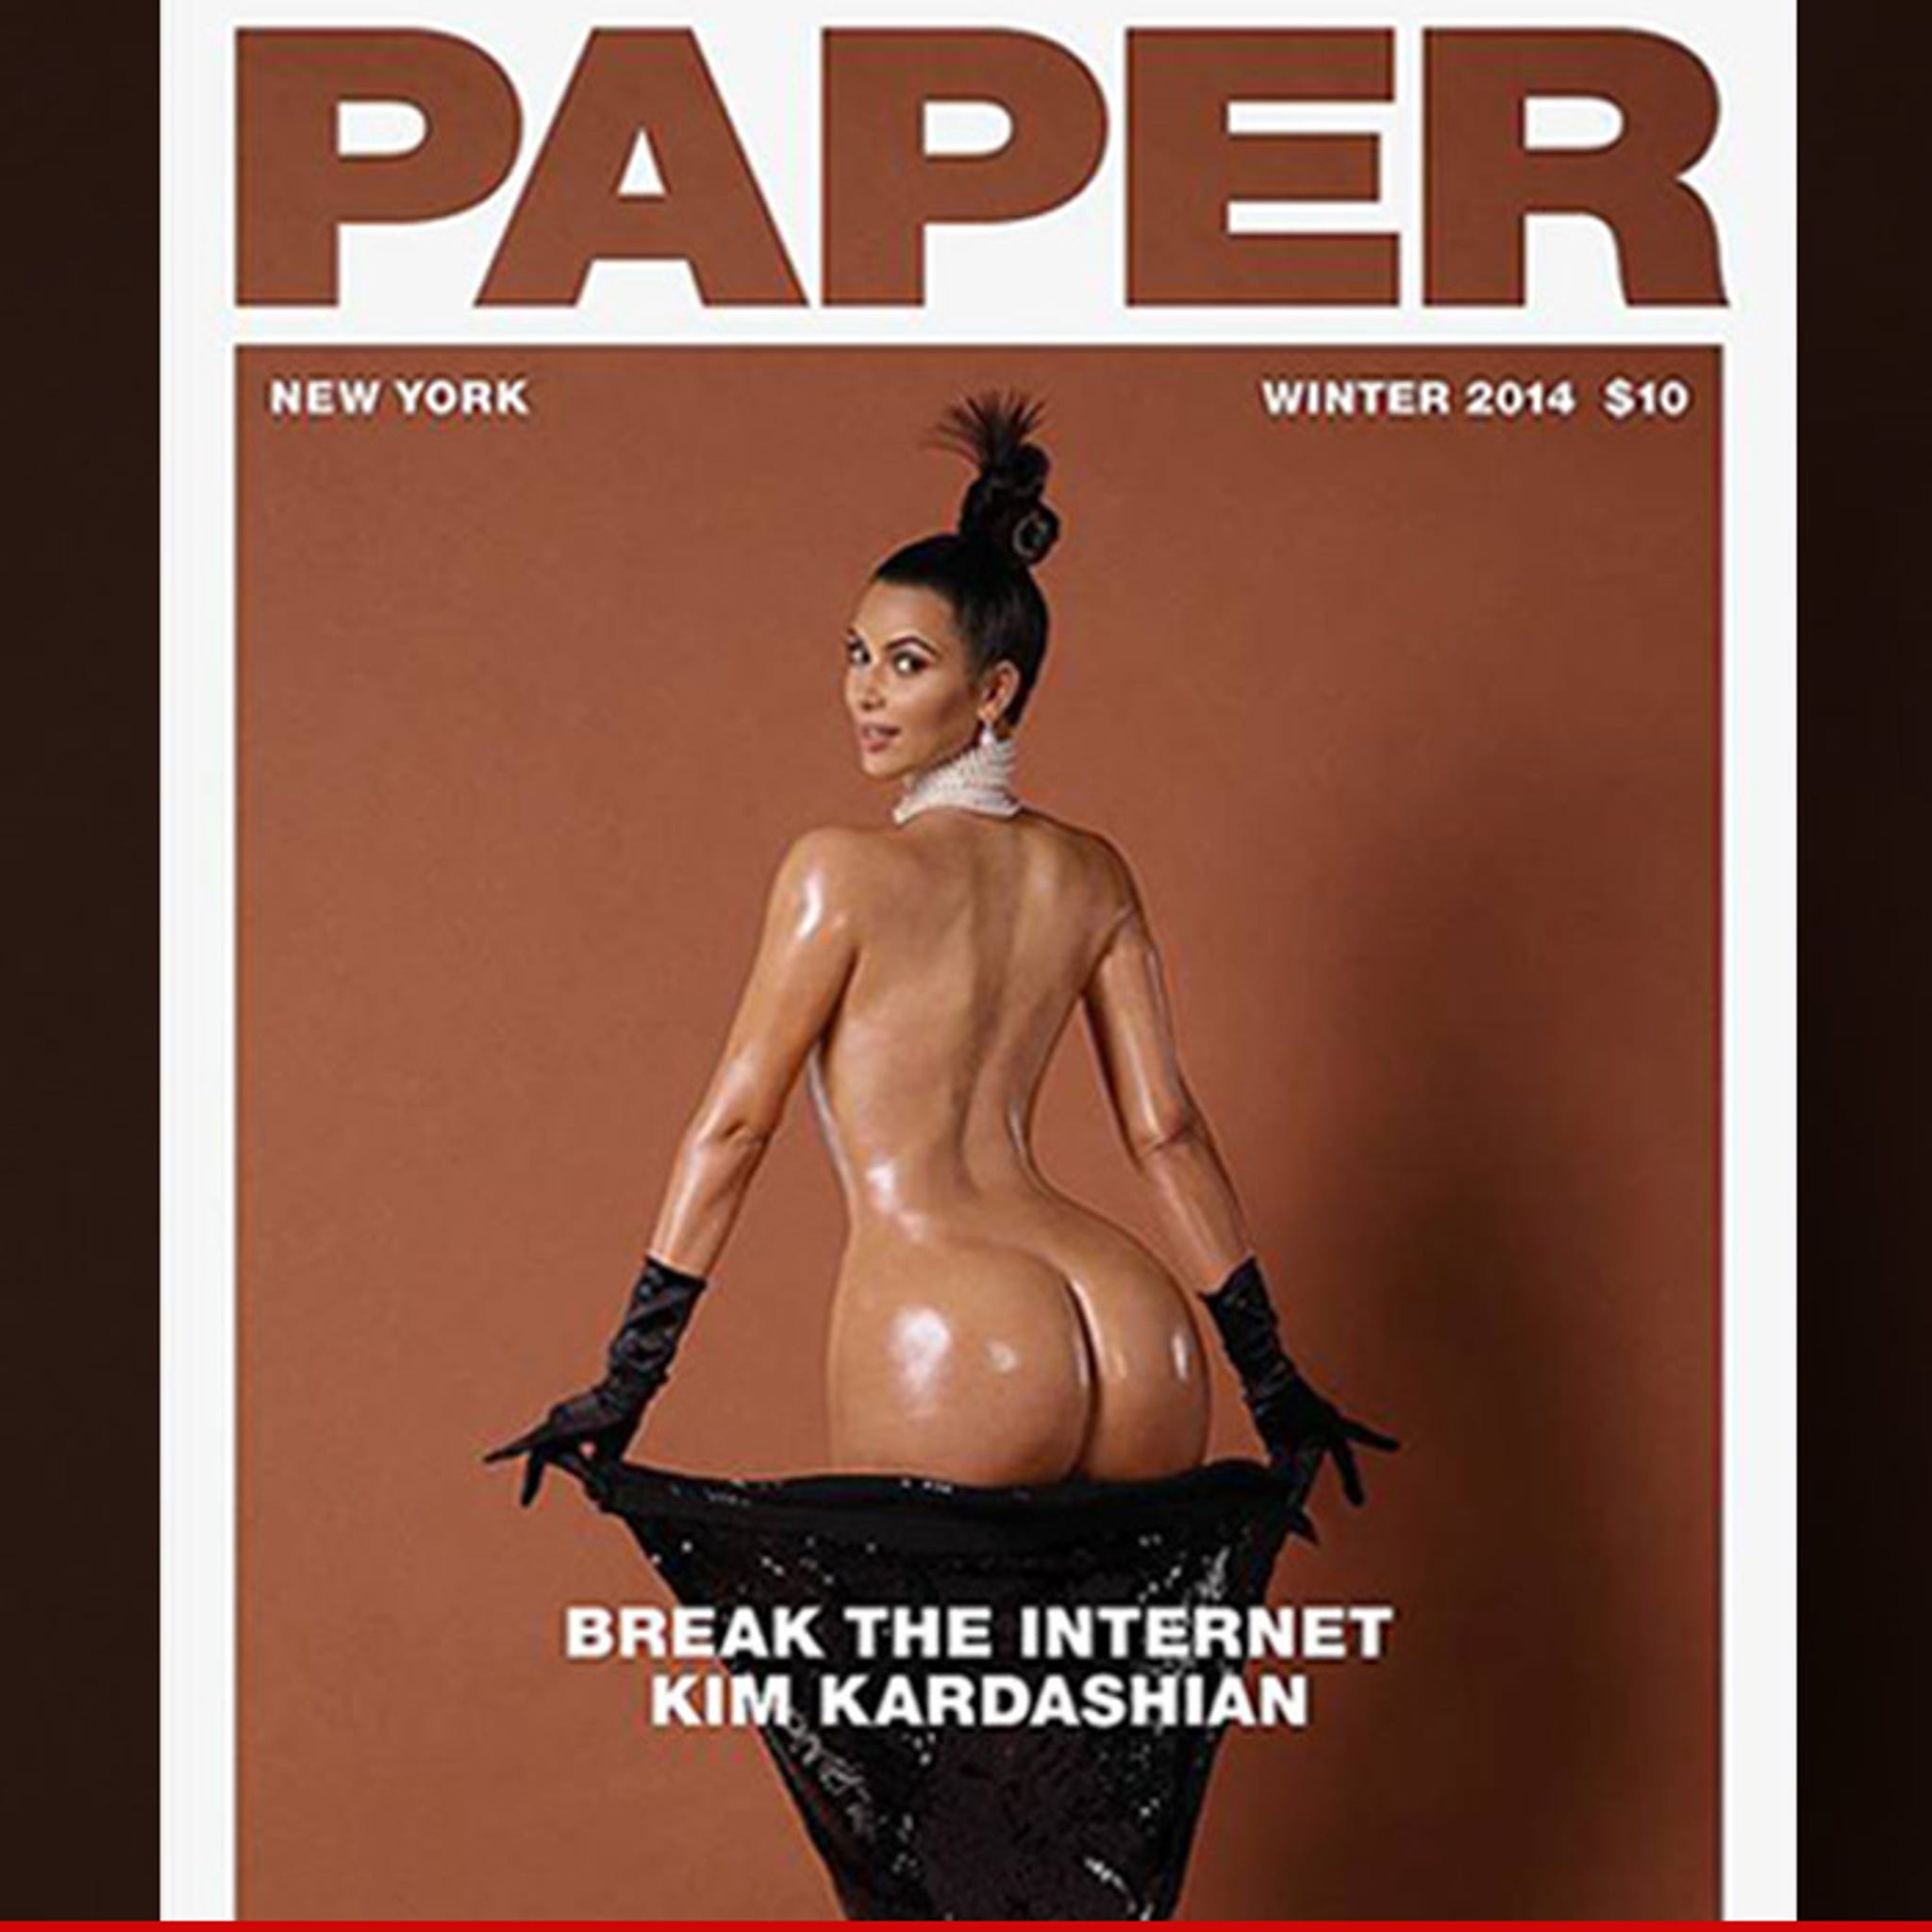 ashly fuller recommends kim kardashian butt nude pic